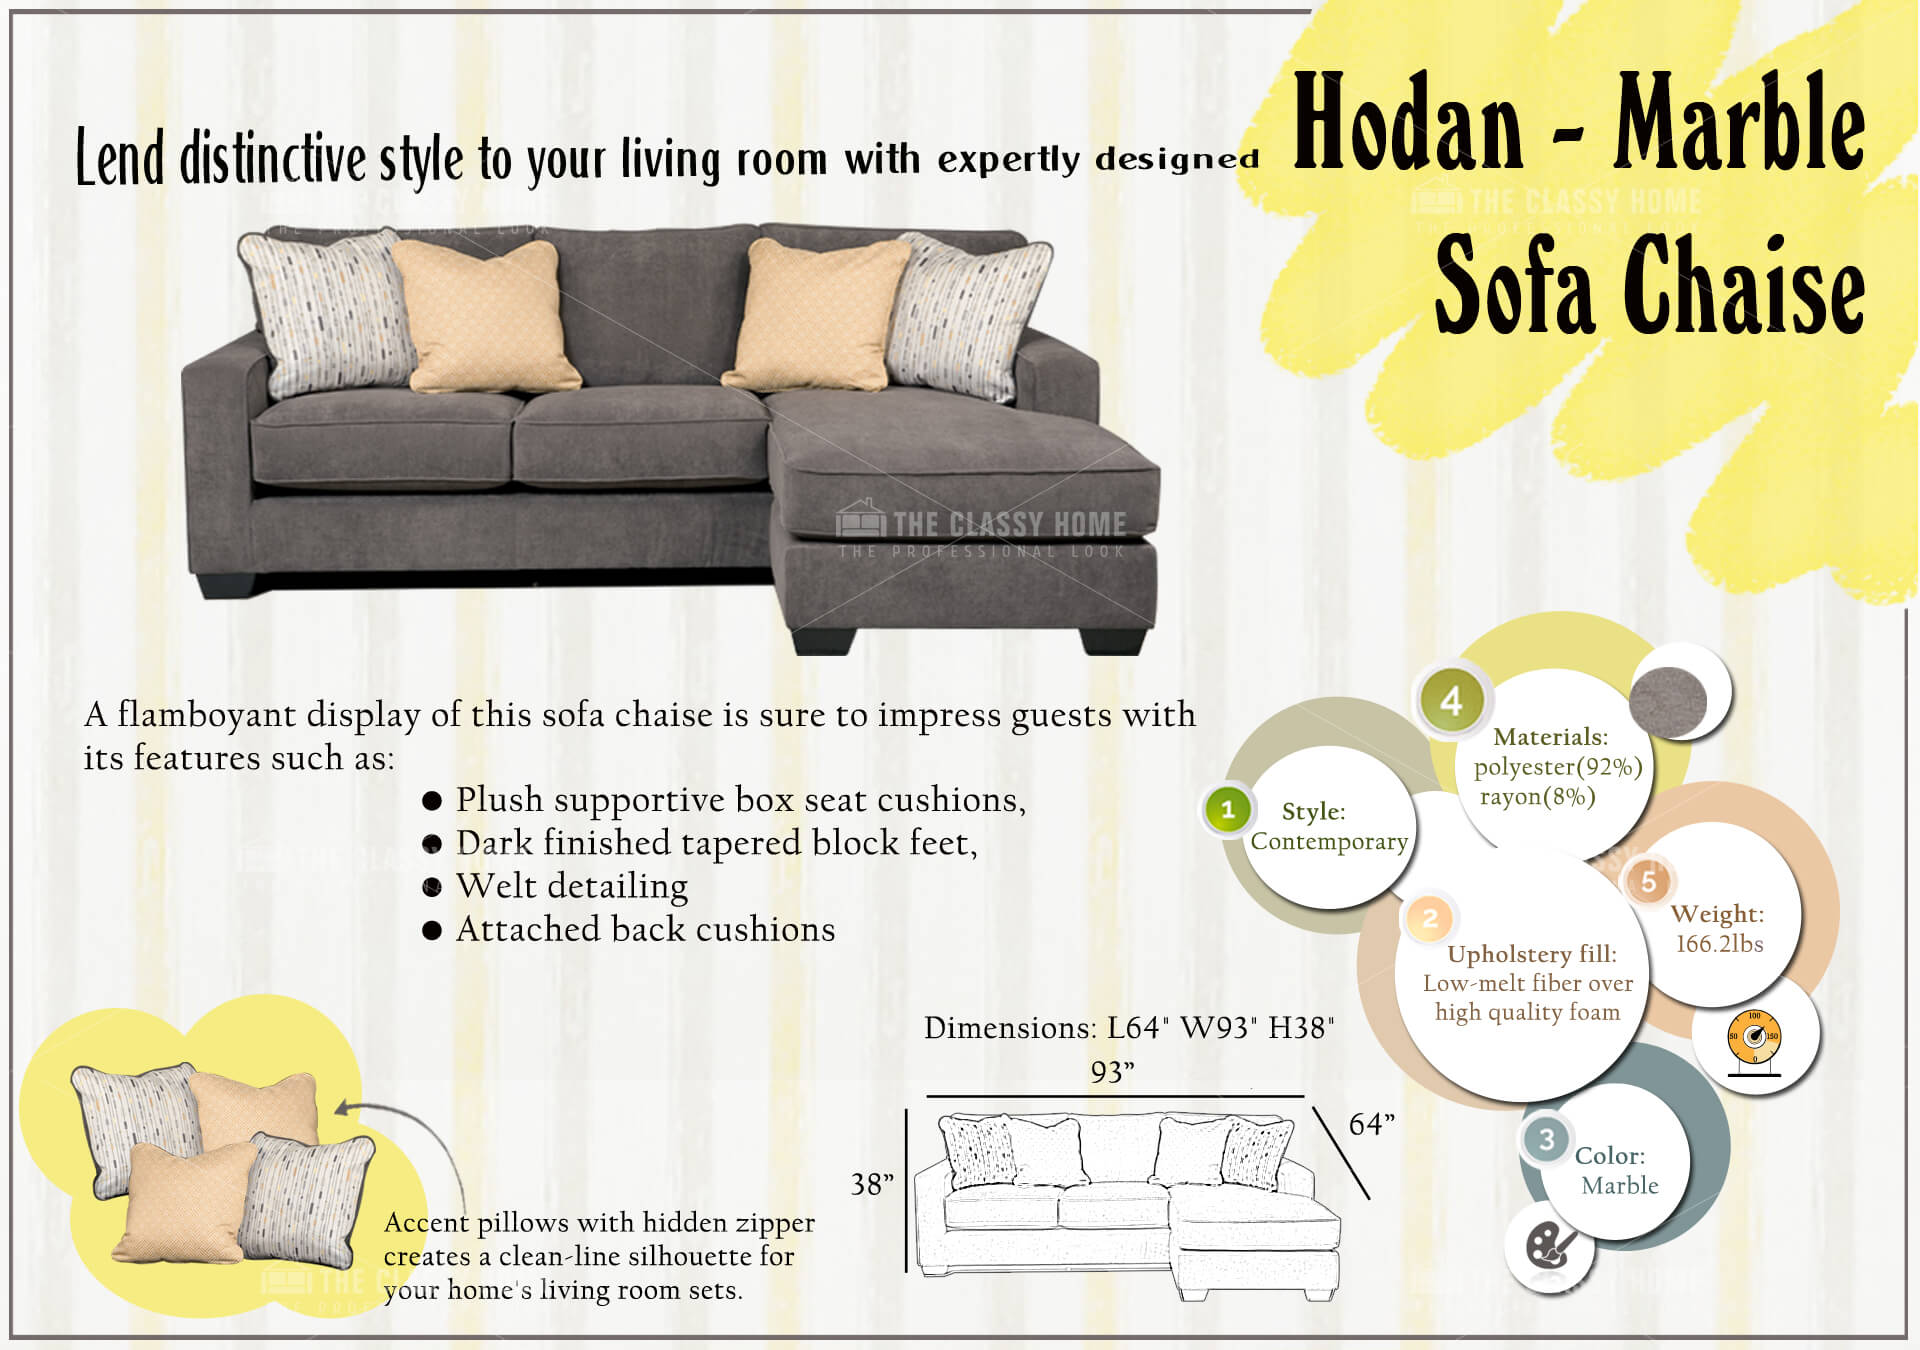 Ashley Furniture Hodan Sofa Chaise The Classy Home